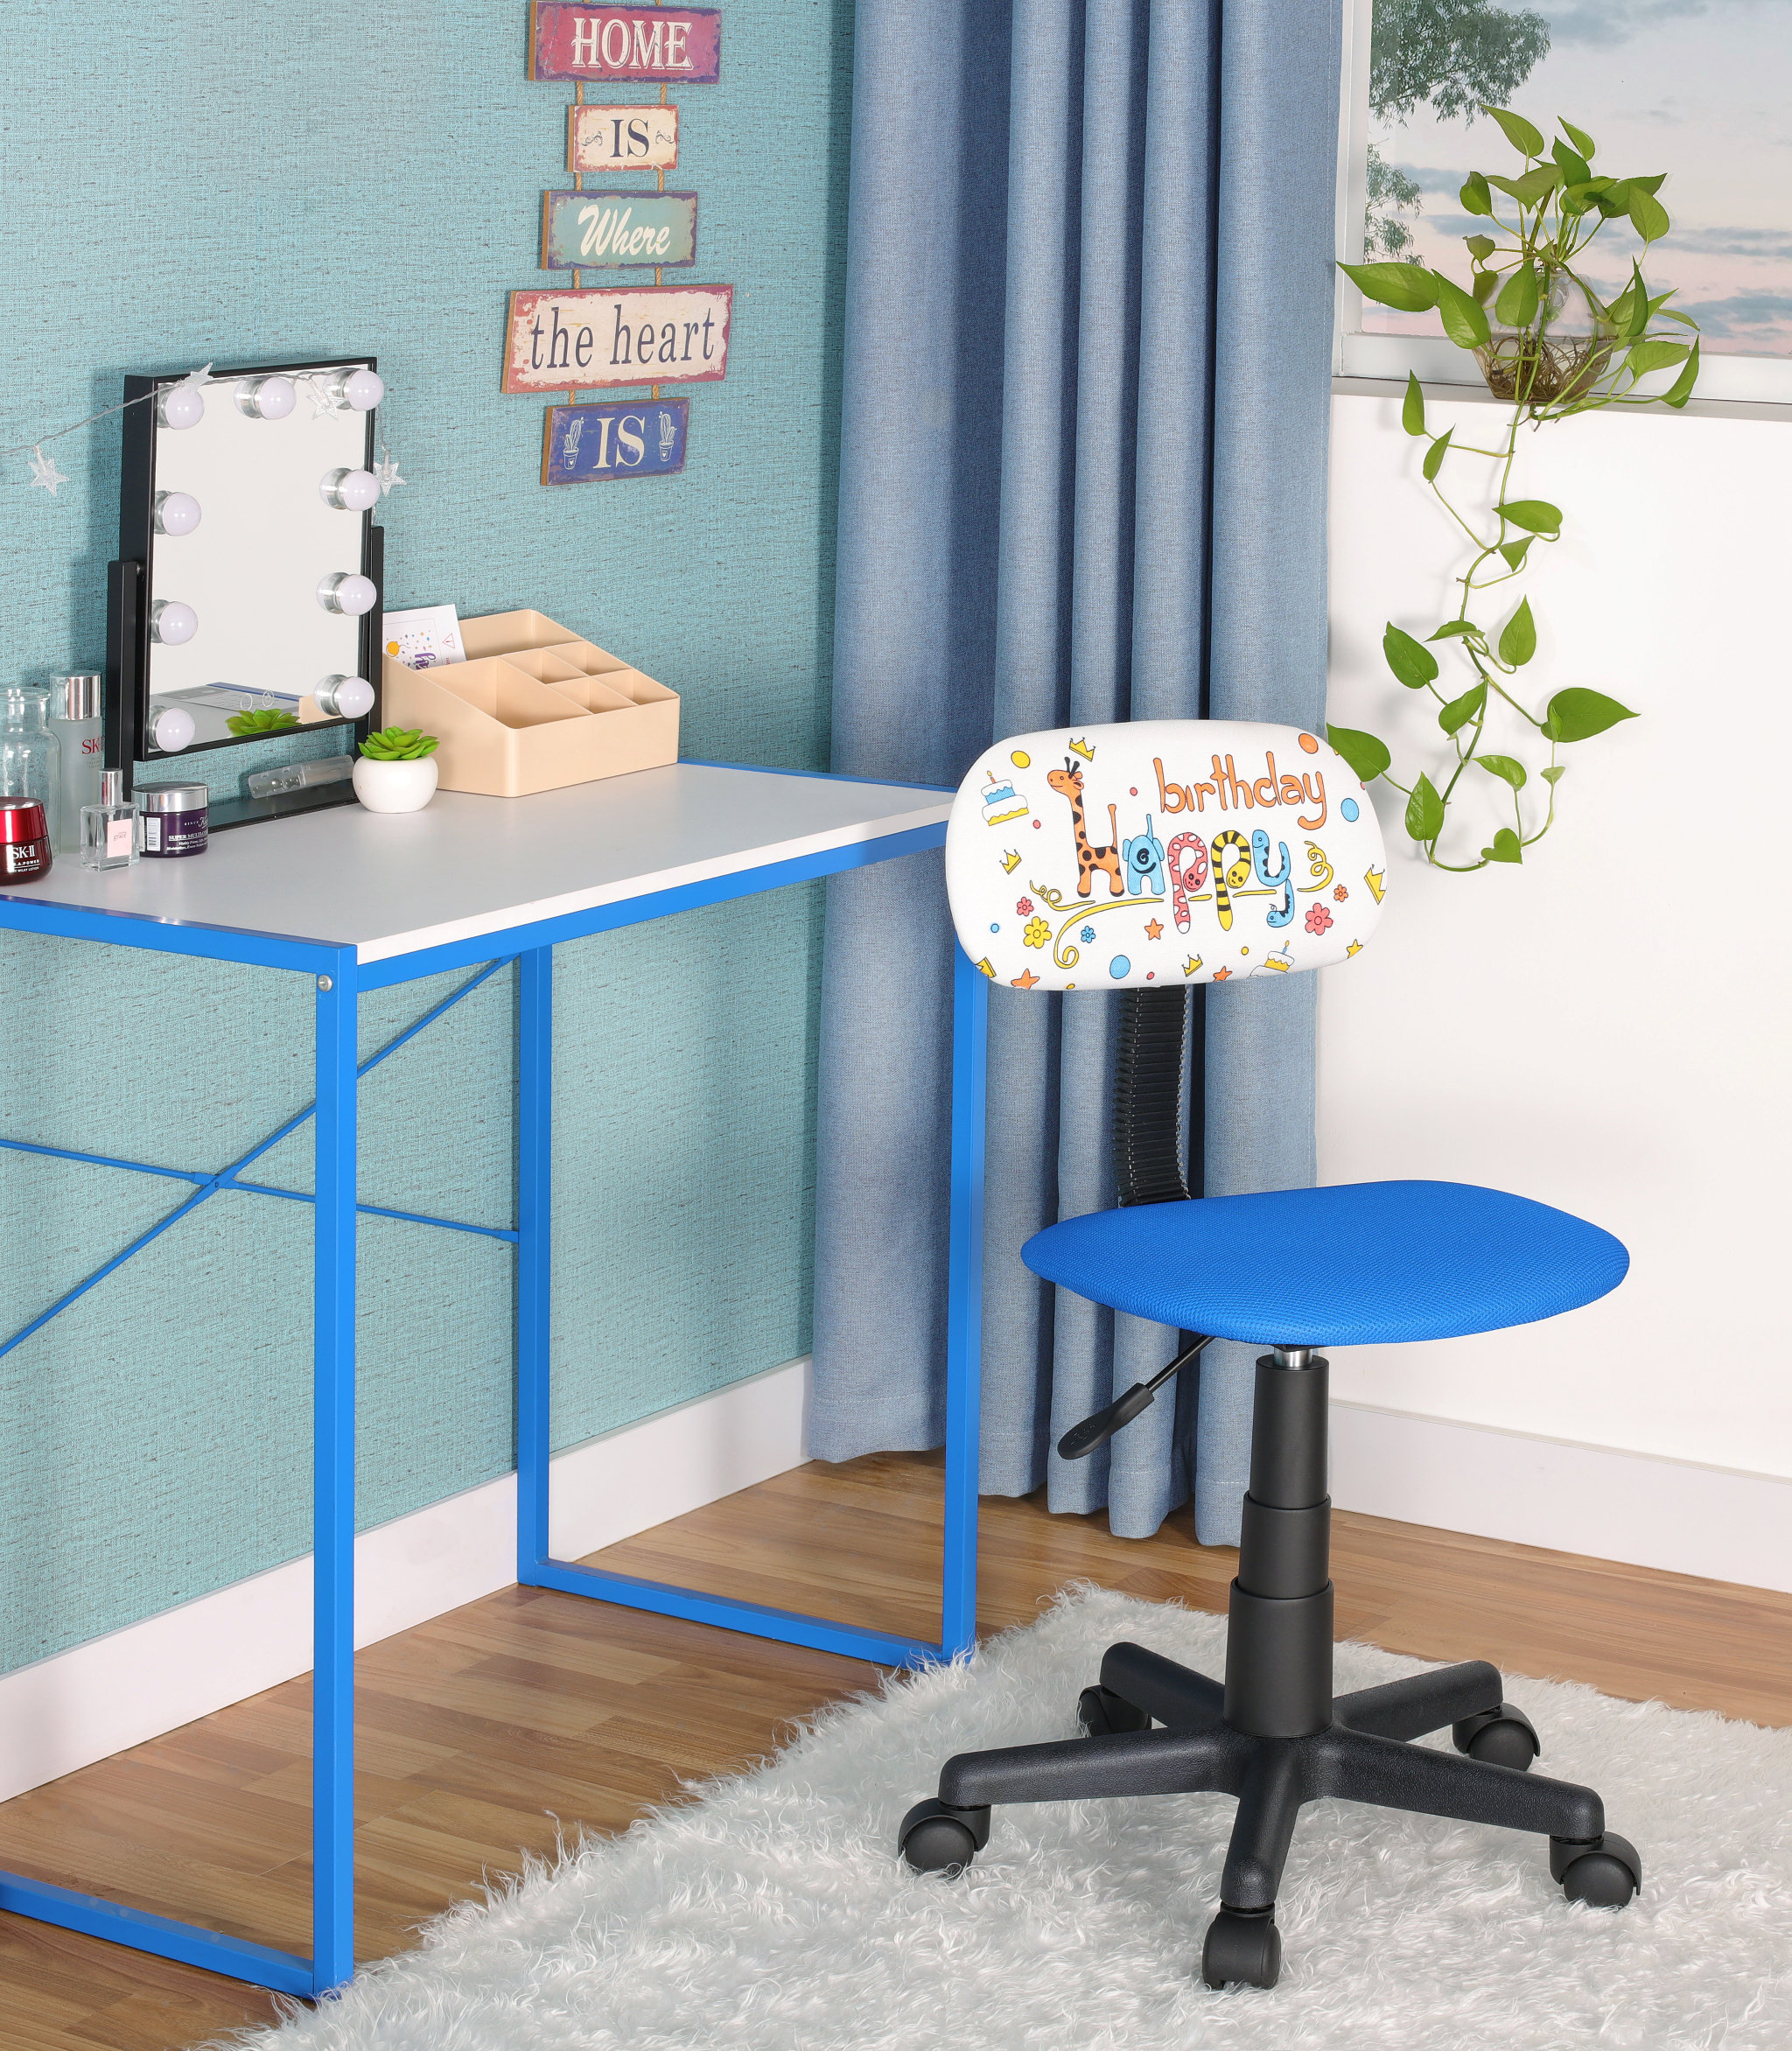 Jjs Low-Back Adjustable Plastic Rolling Drawing Desk Chair in Blue